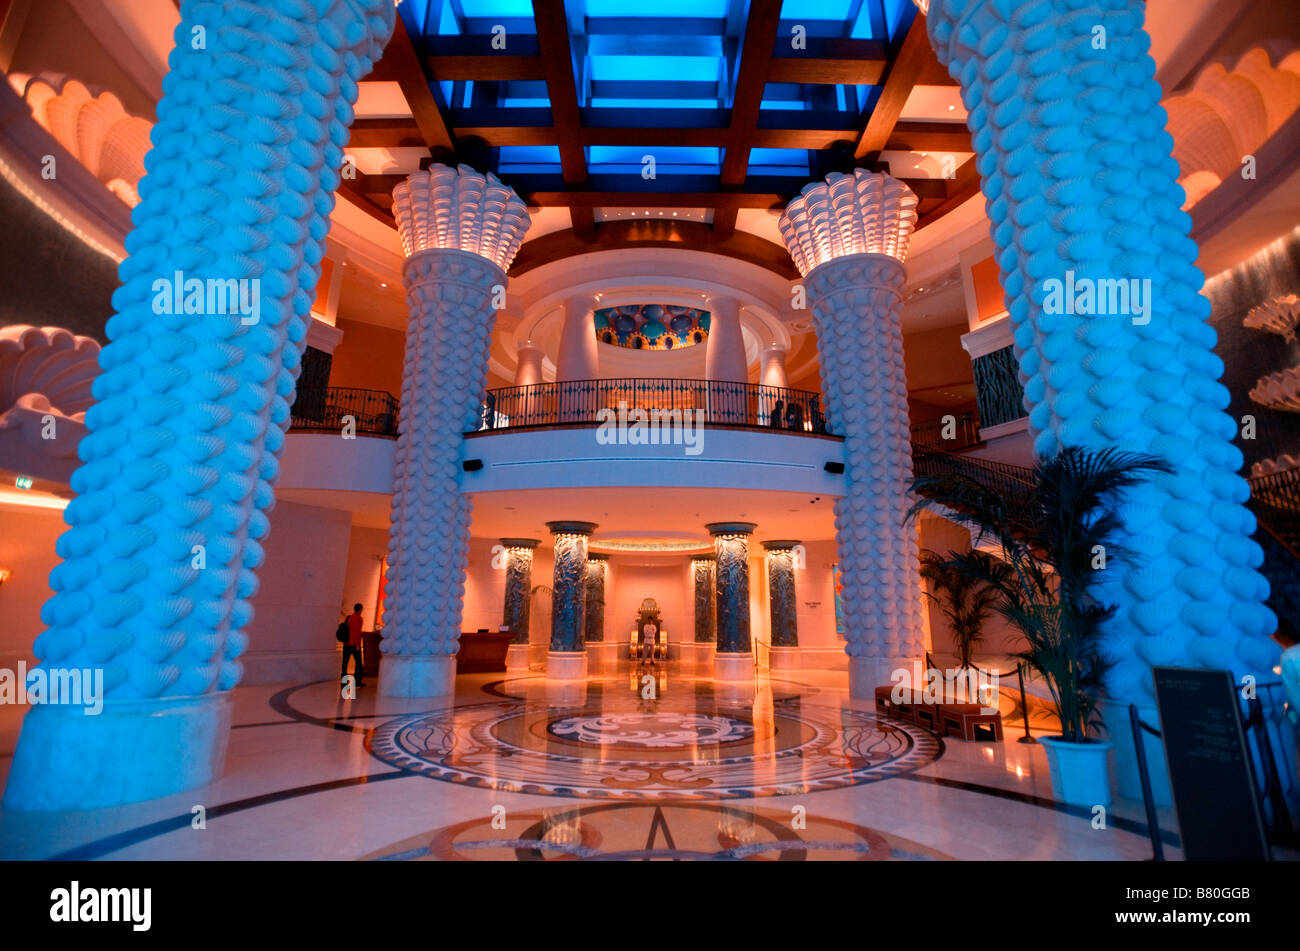 the lobby of Atlantis hotel at Palm Jumeirah Dubai Stock Photo